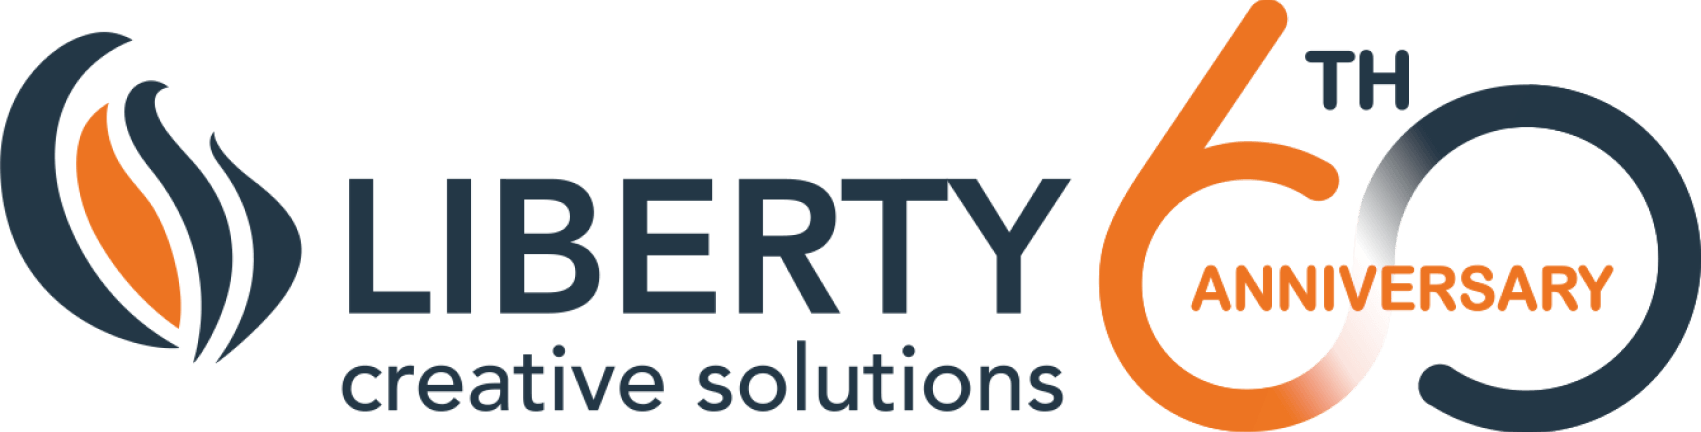 Liberty Creative Solutions 60th Anniversary Logo